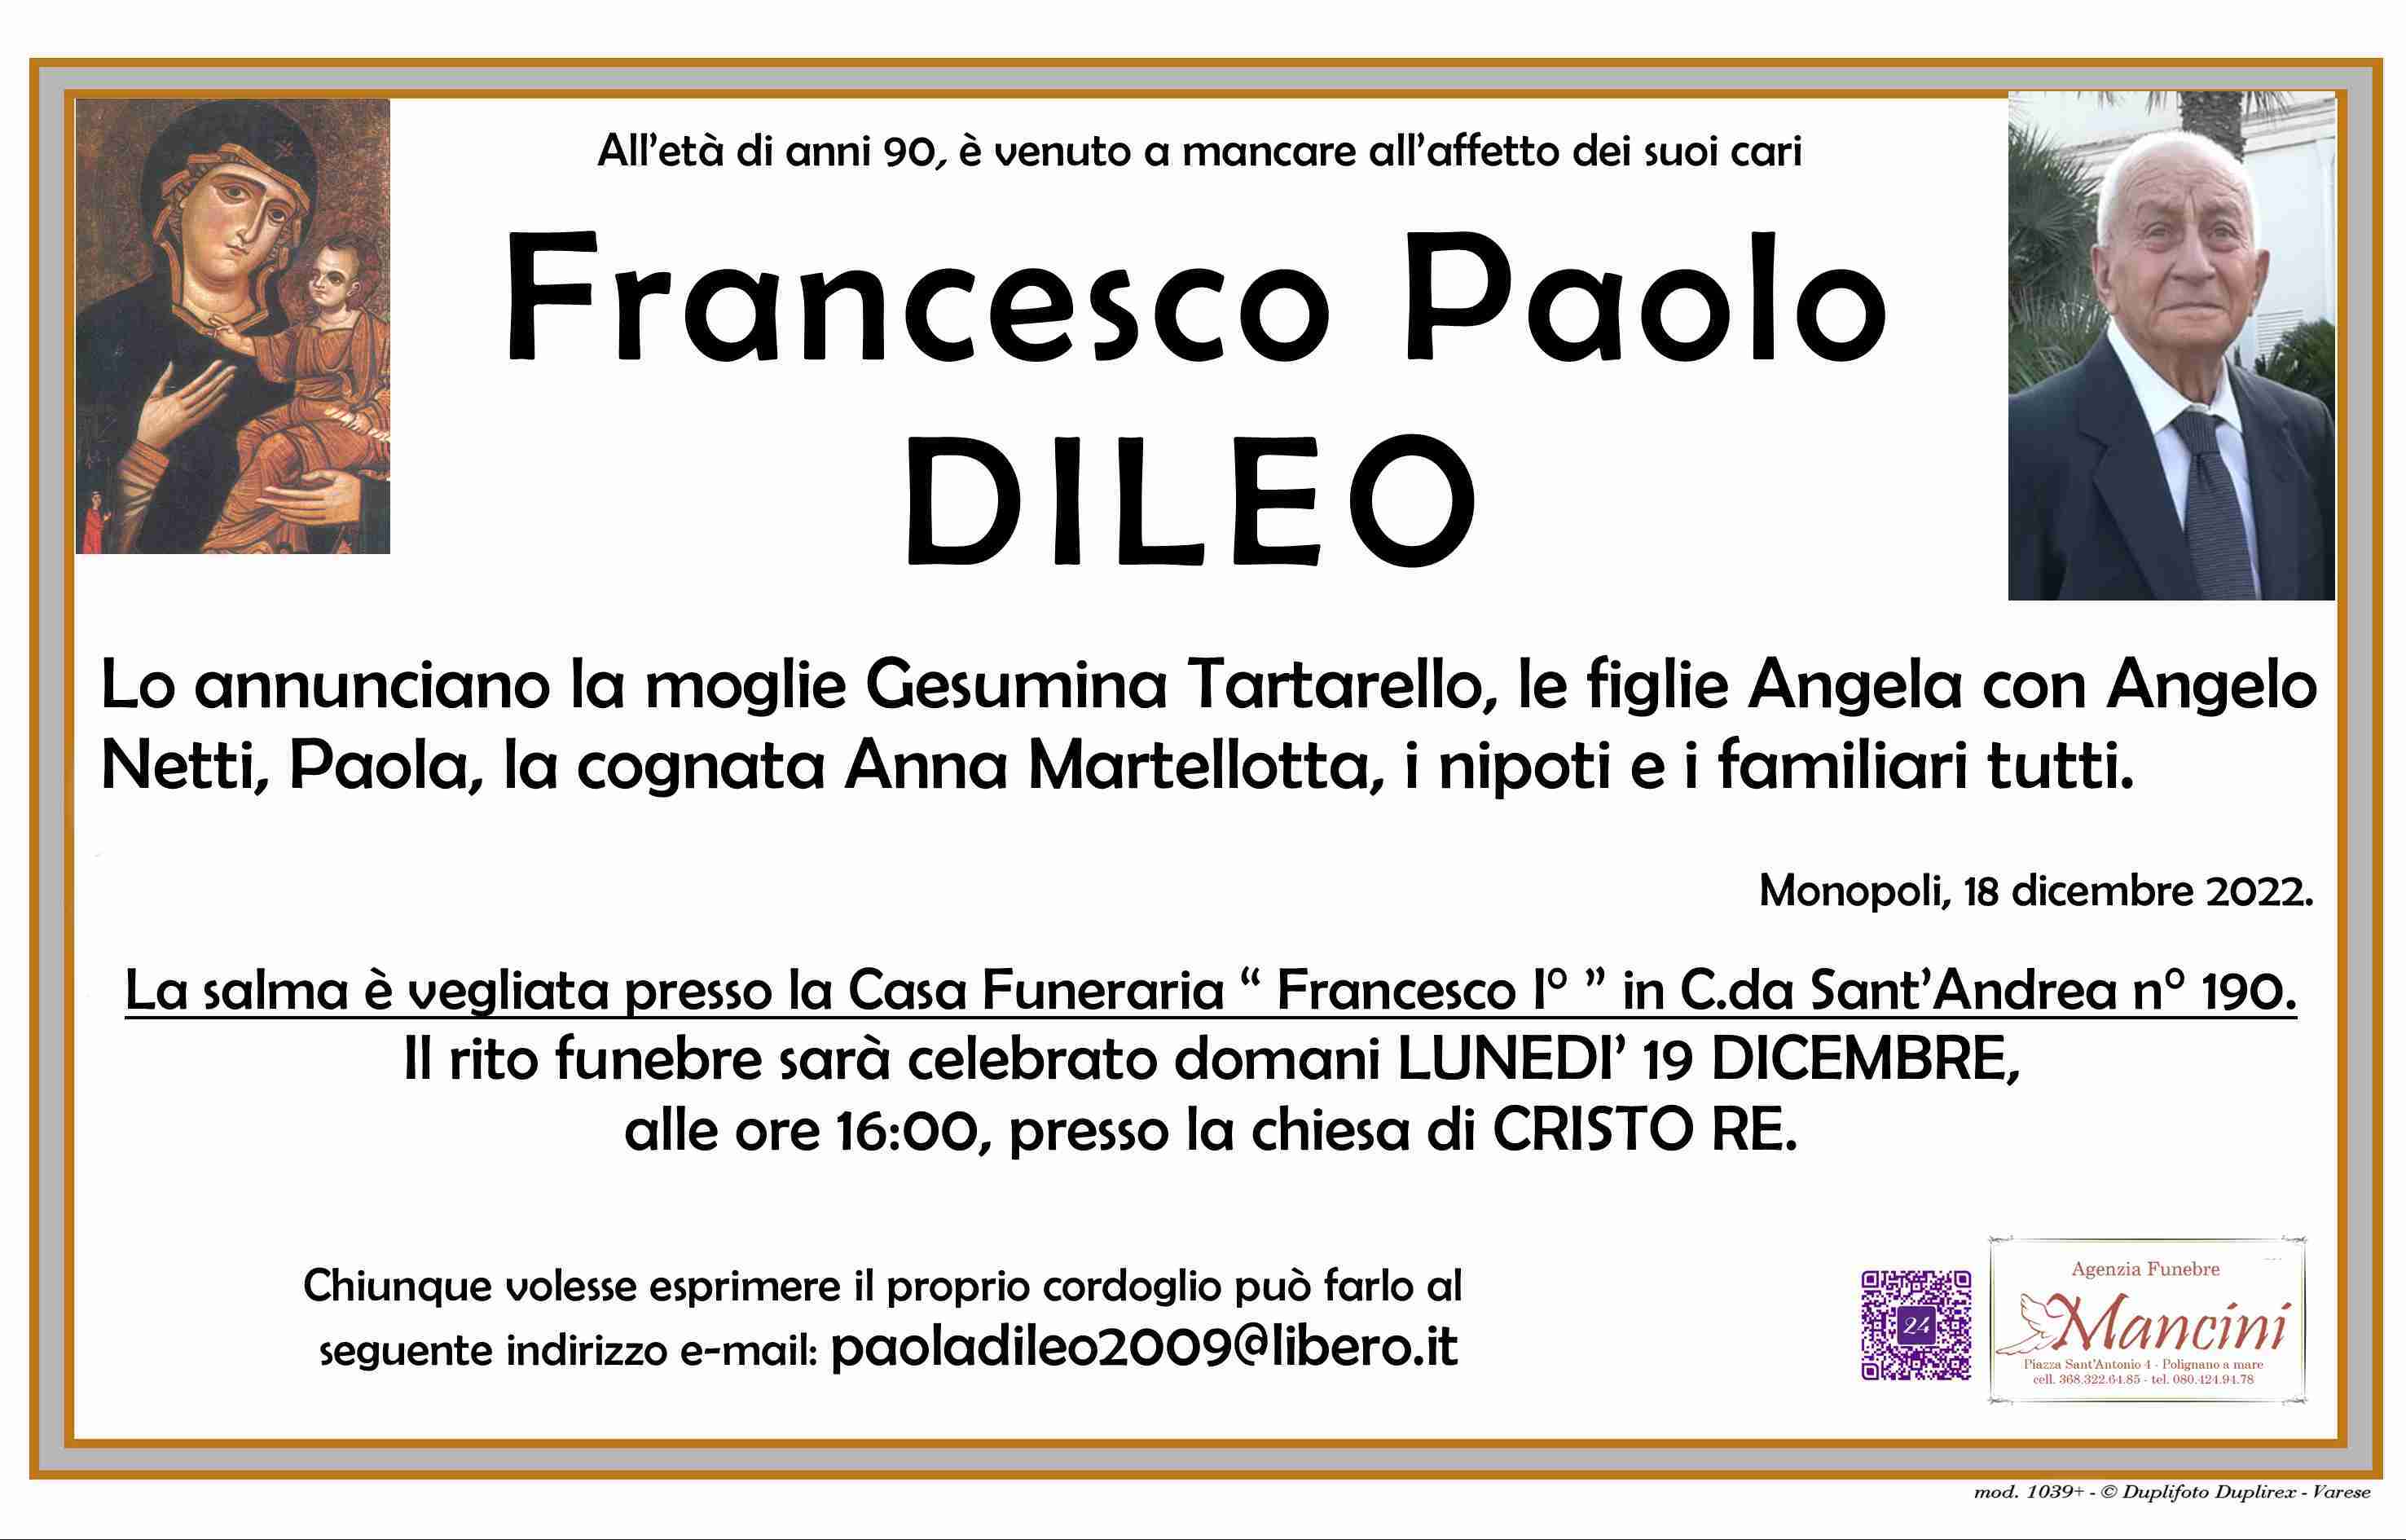 Francesco Paolo Dileo